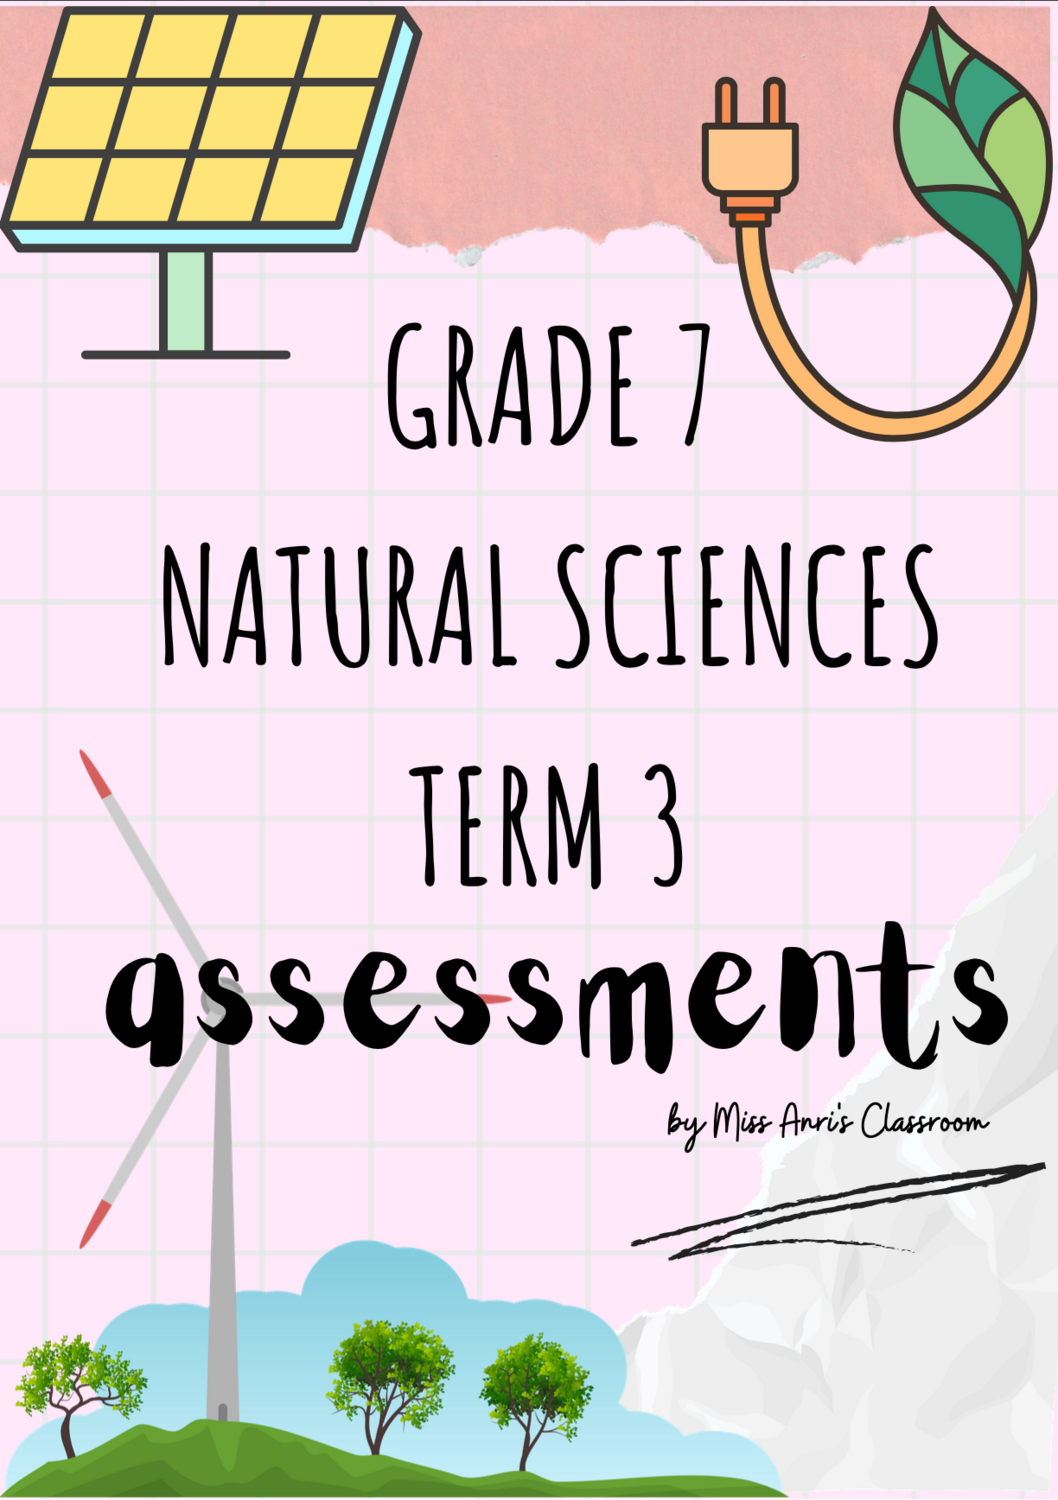 Grade 7 Natural Sciences term 3 assessments (2022)